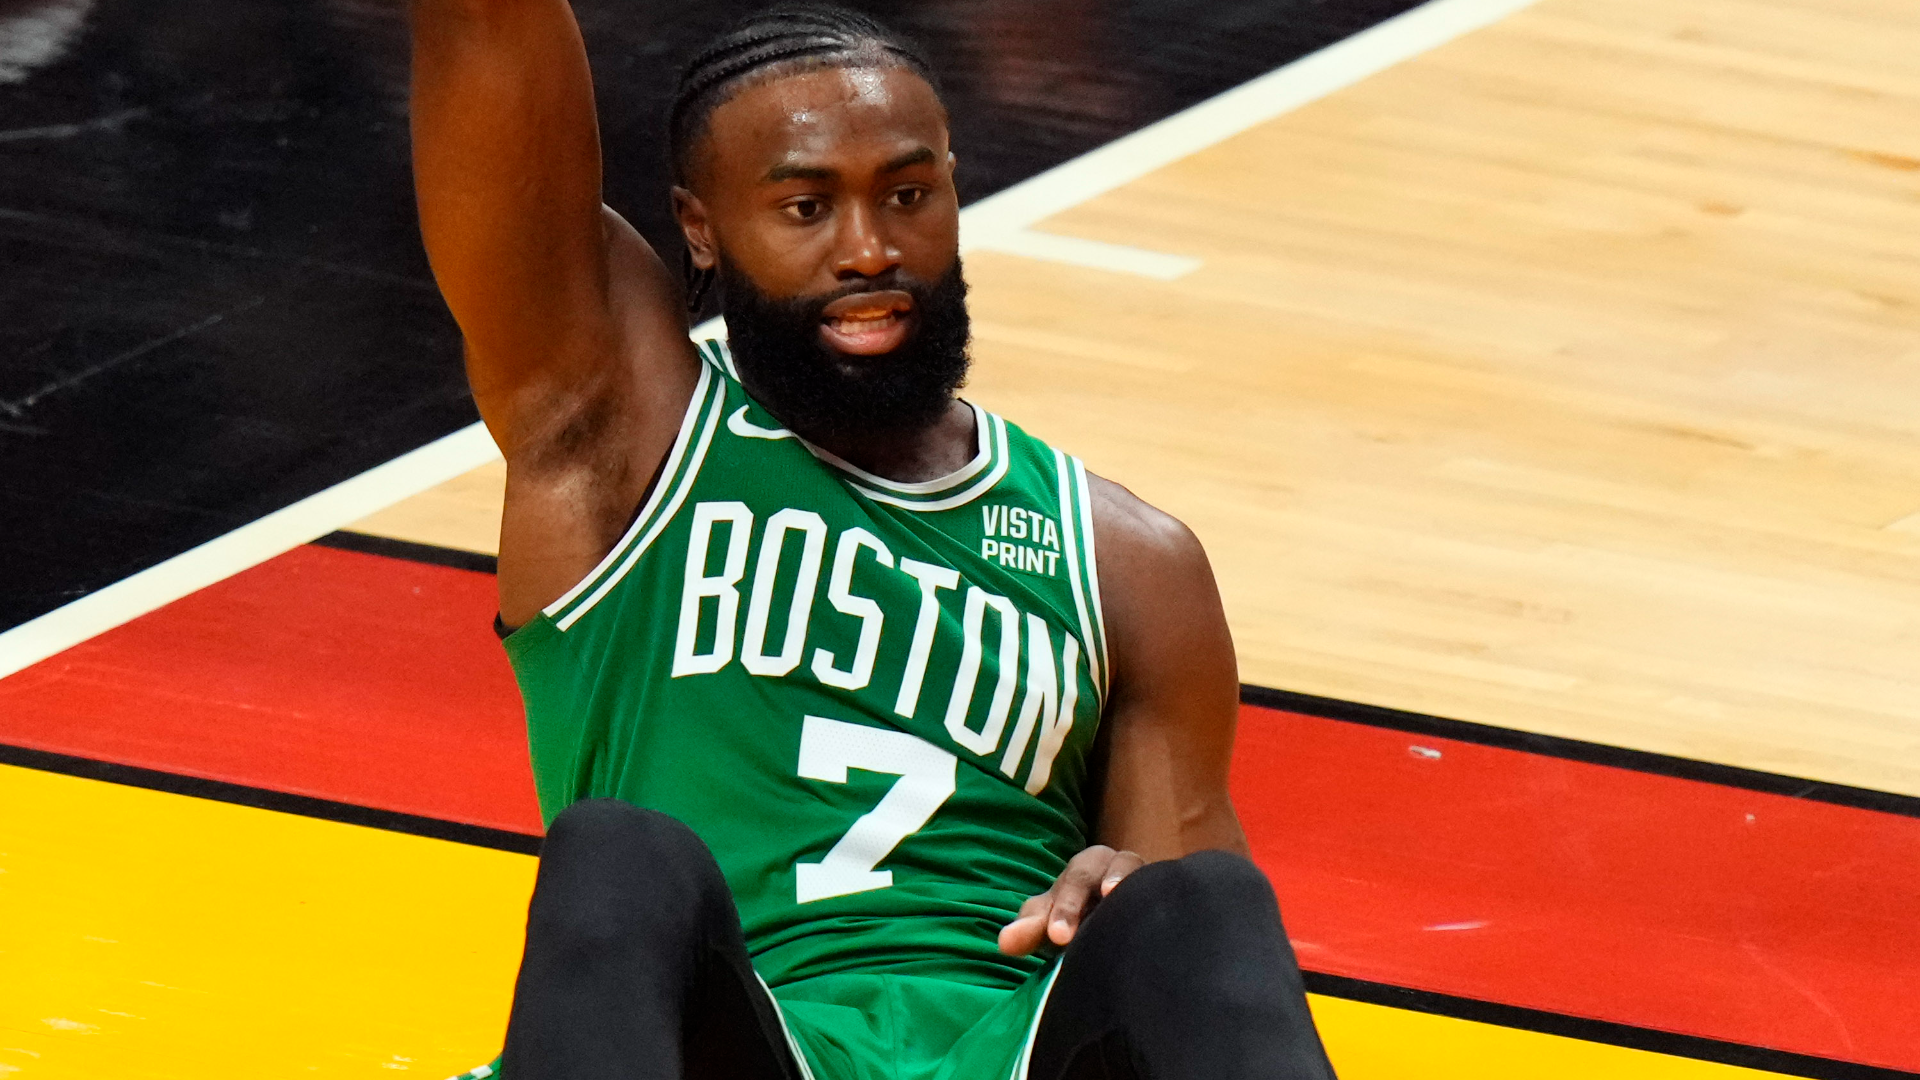 Boston Celtics' Jaylen Brown agrees to 5-year supermax deal worth